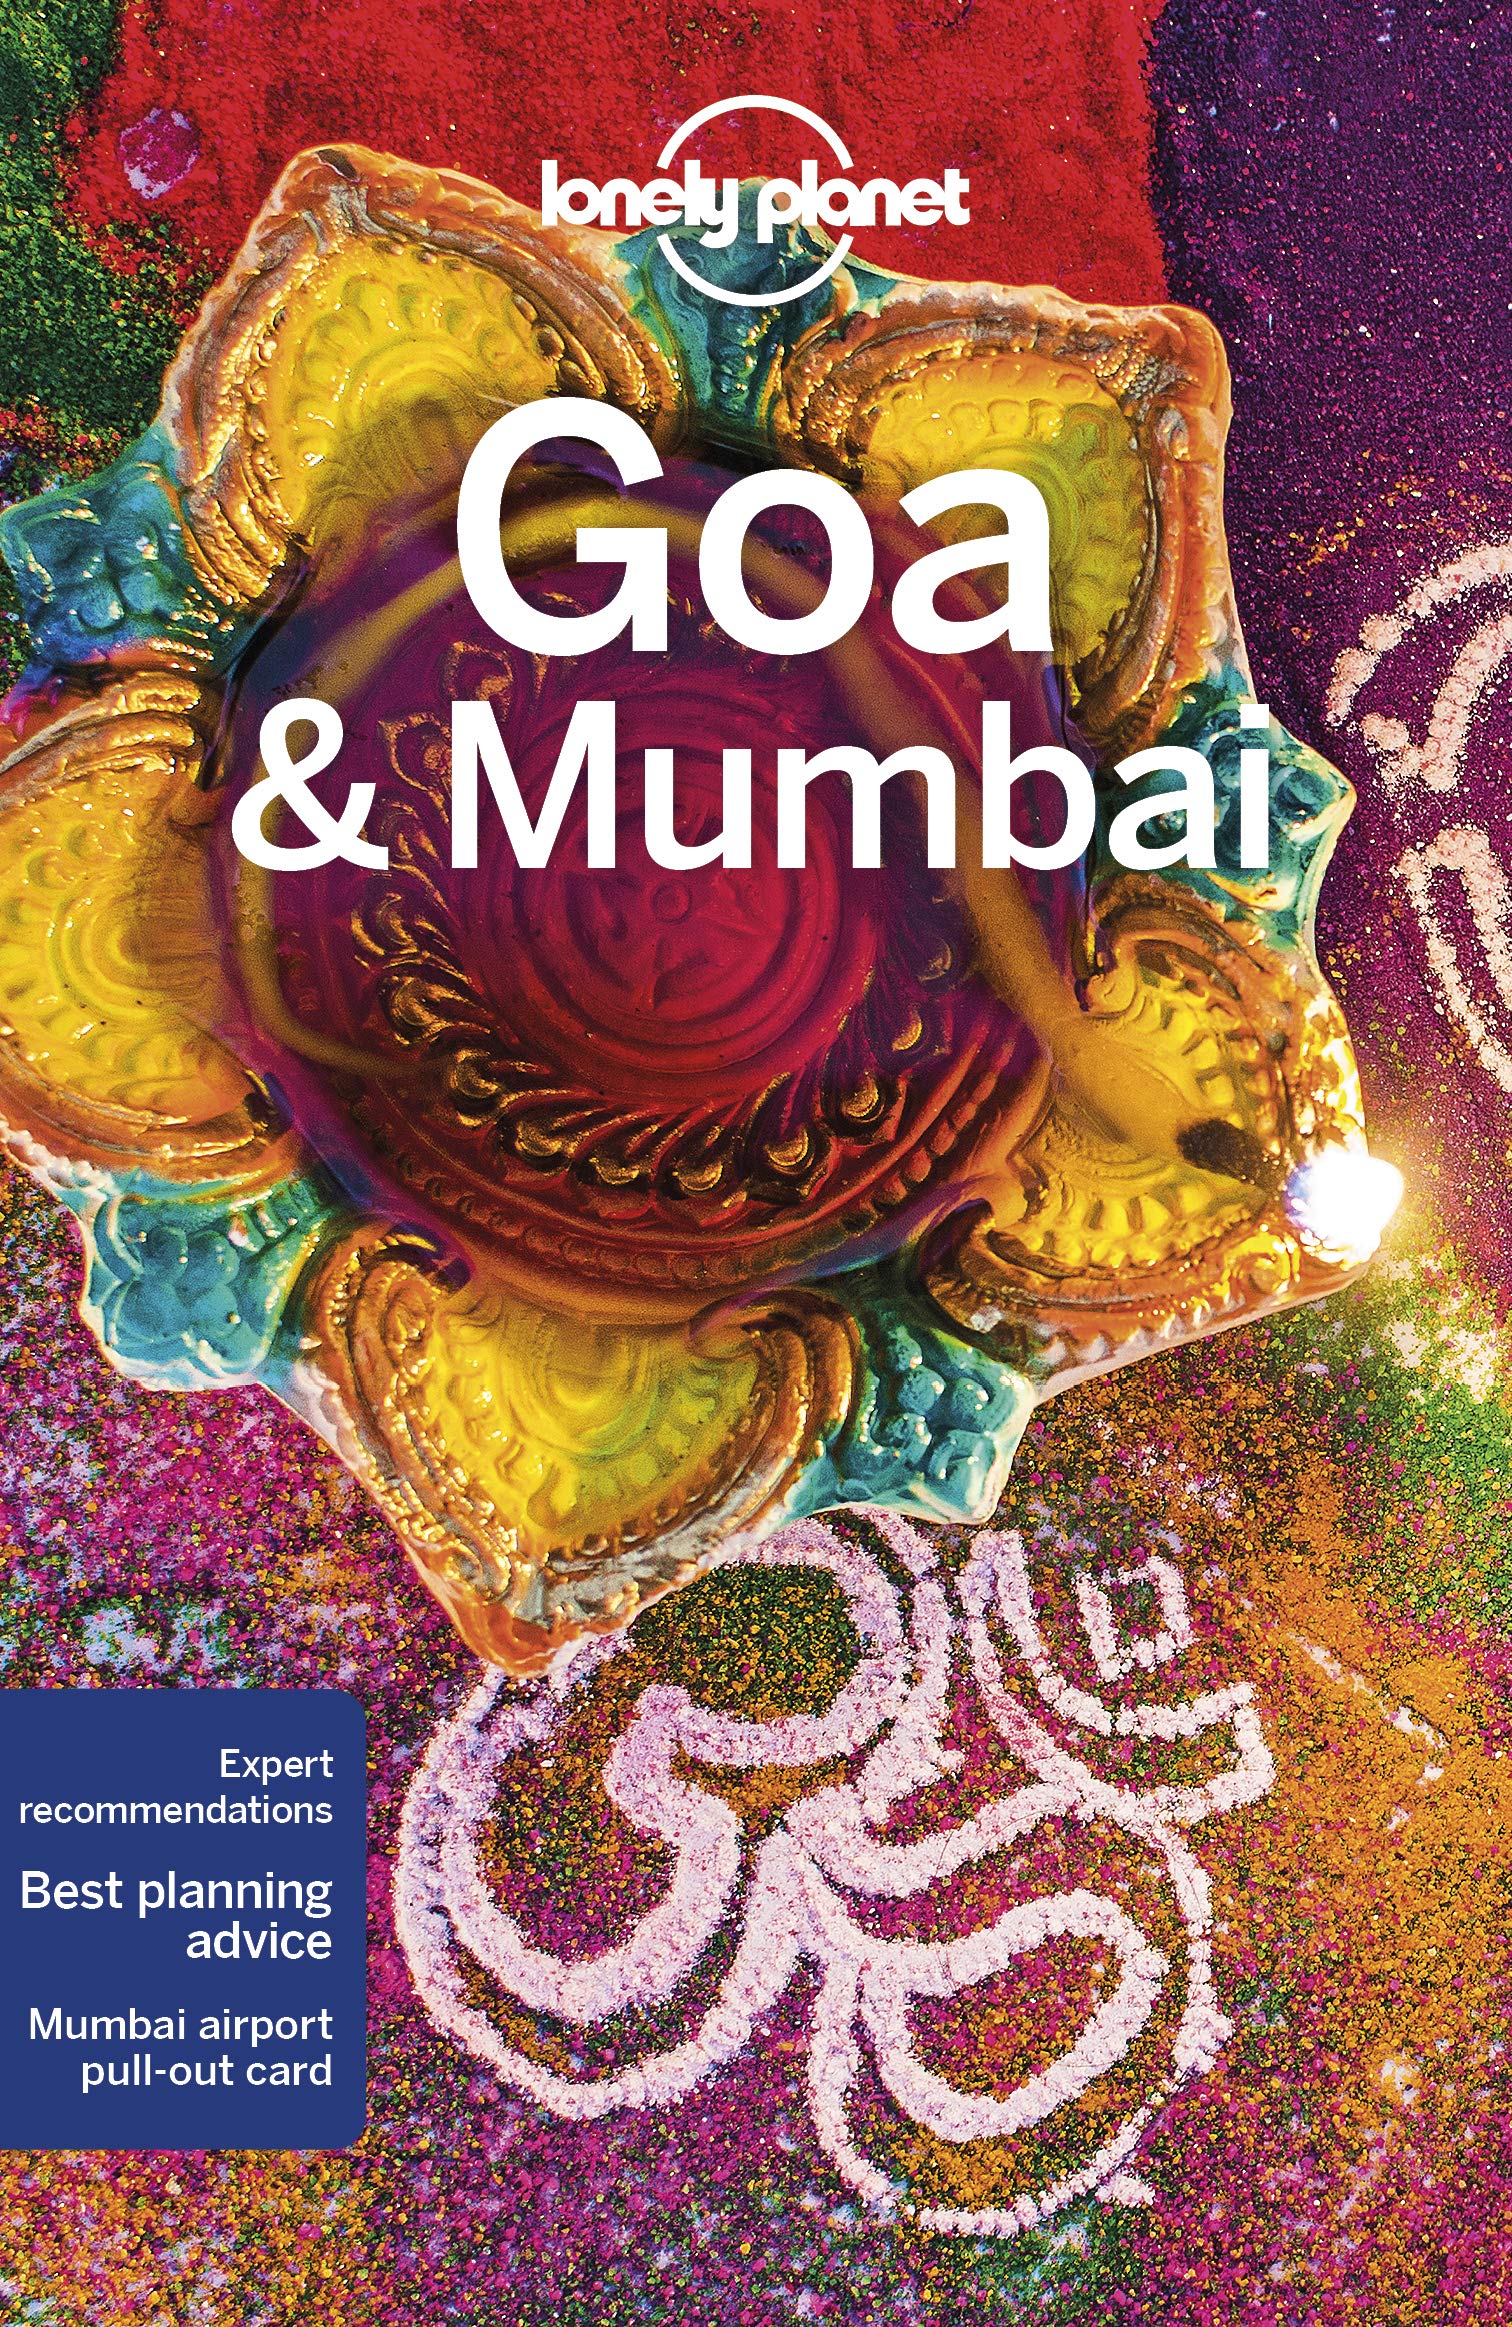 Online bestellen: Reisgids Goa & Mumbai (Bombay) | Lonely Planet